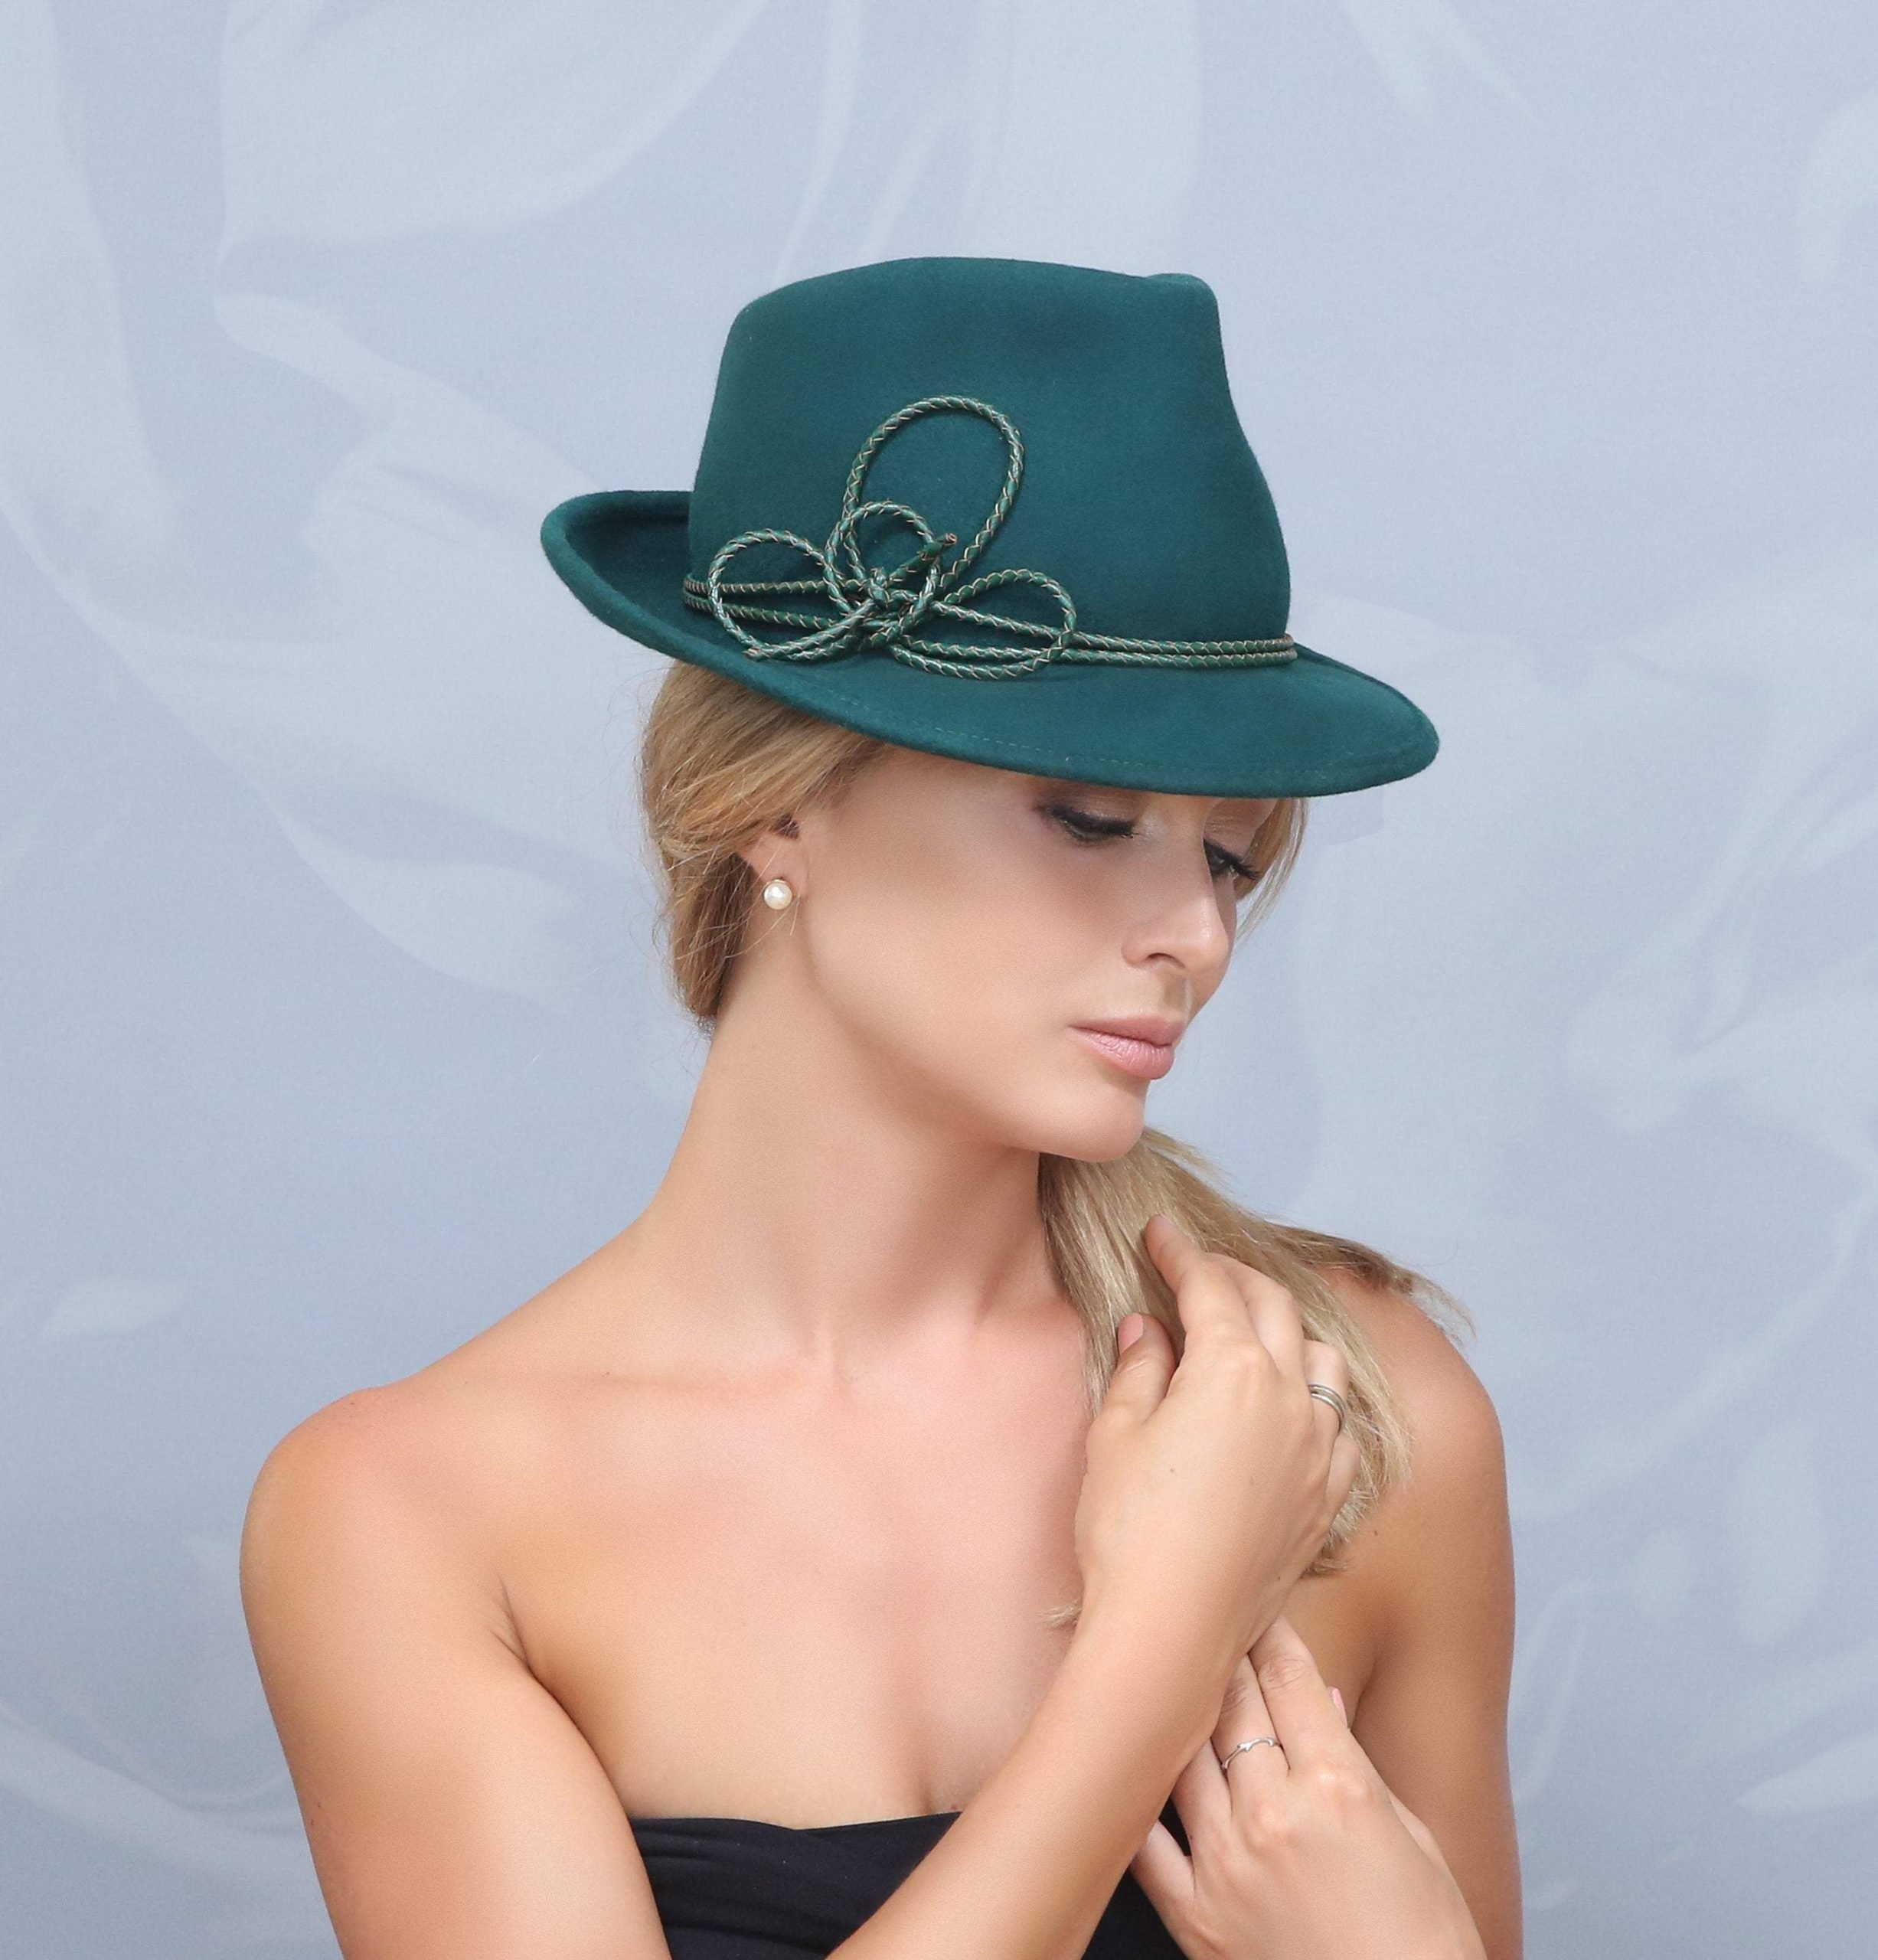 Green hat. Felt hat. Winter hat. Fall hat. Couture hat. Designer hat. Fedora. Derby hat. Fashion hat. Hunter green hat.